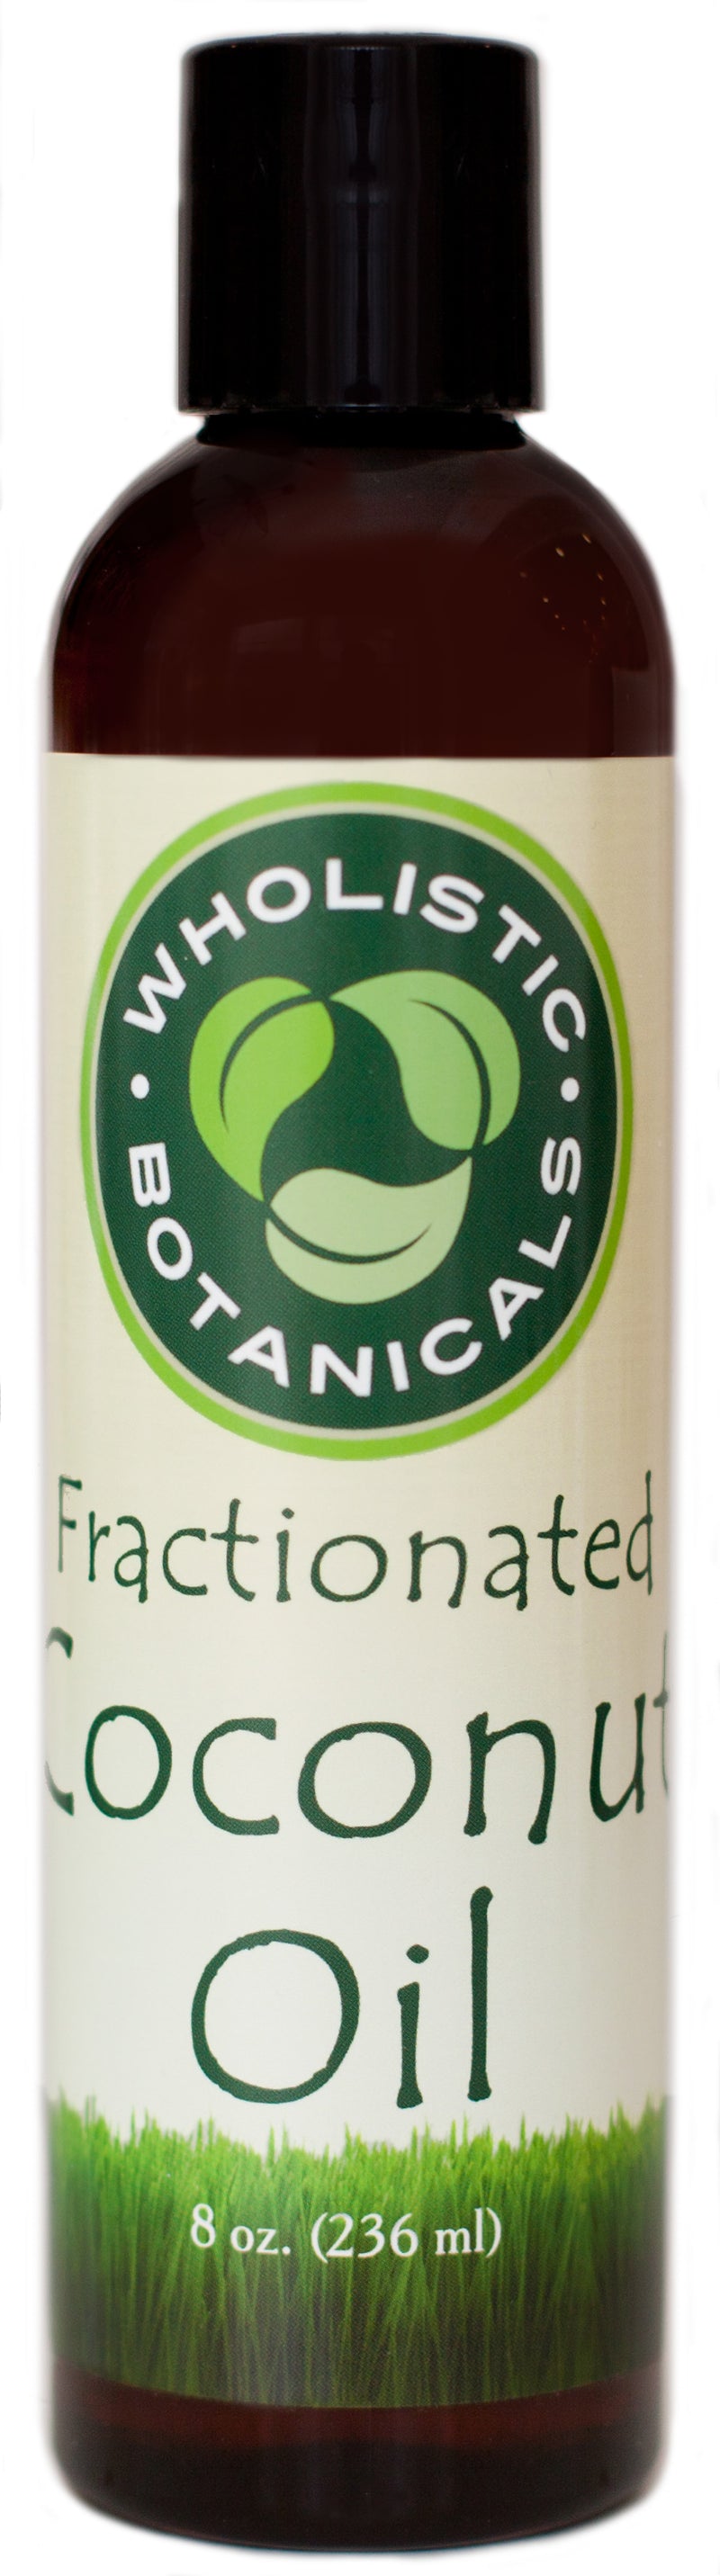 Fractionated Coconut Oil 8 oz